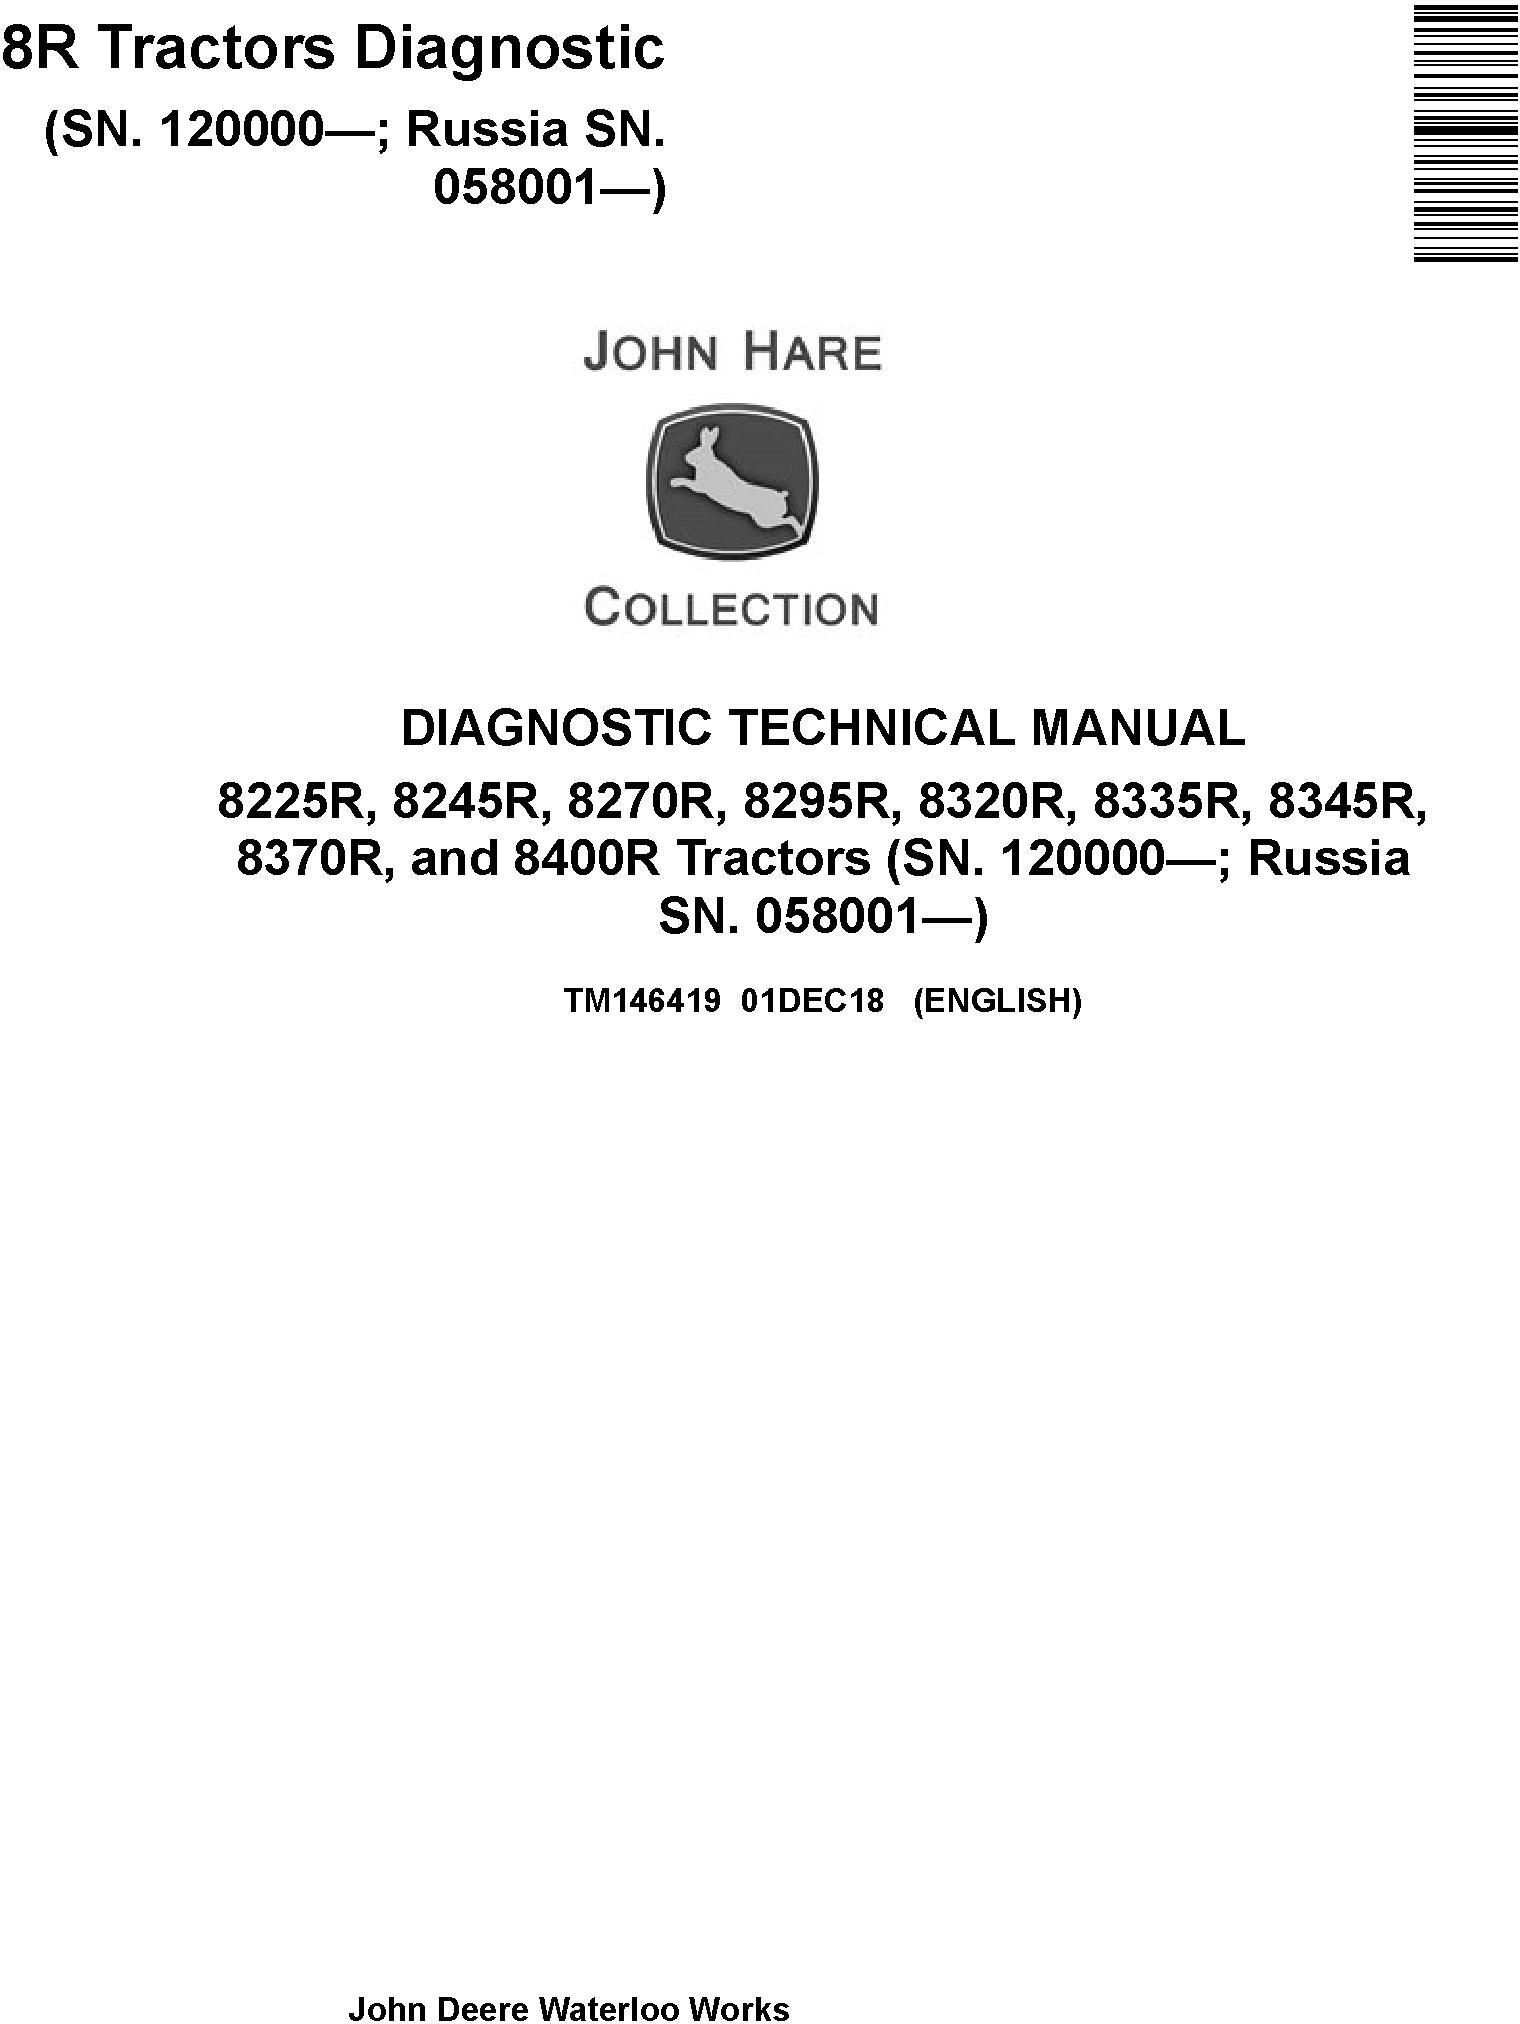 John Deere 8225R 8245R 8270R 8295R 8320R 8335R 8345R 8370R 8400R Tractor Diagnostic Manual TM146419